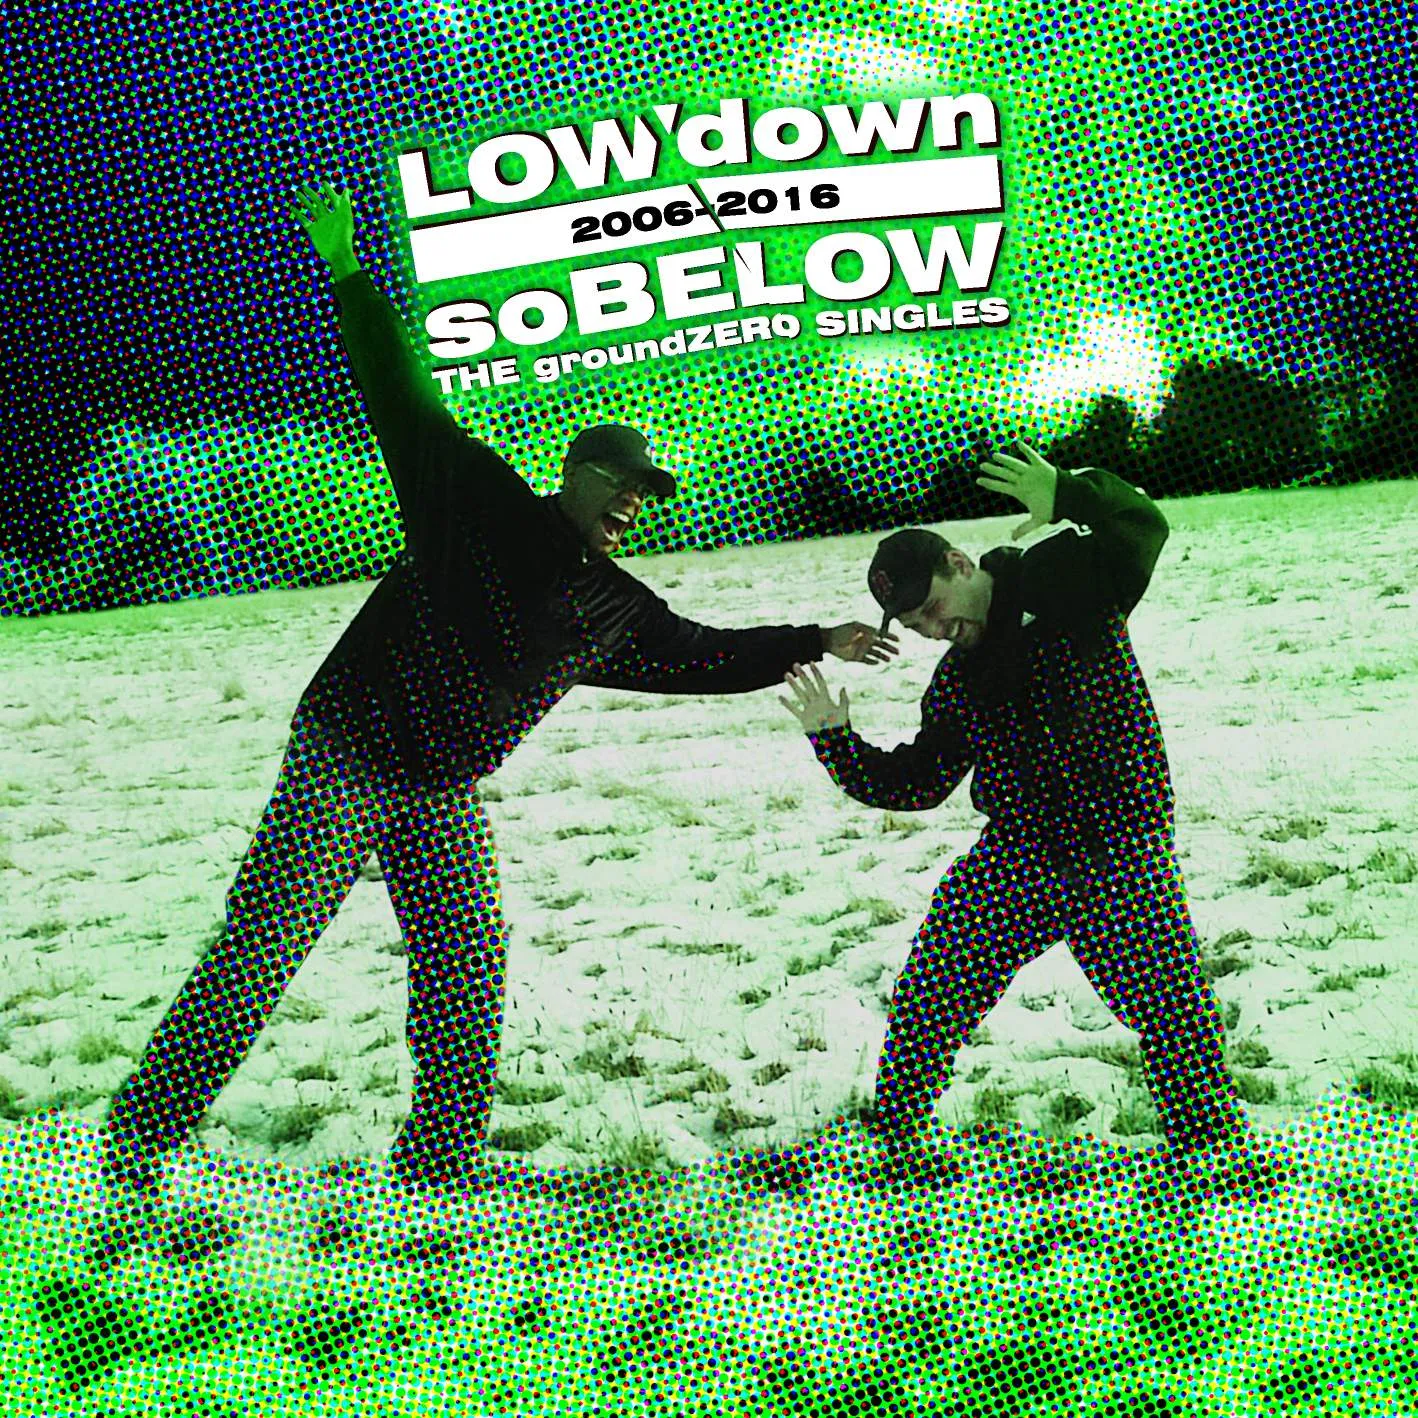 Album cover for “soBELOW (THE groundZERO SINGLES 2006-2016)” by LOWdown